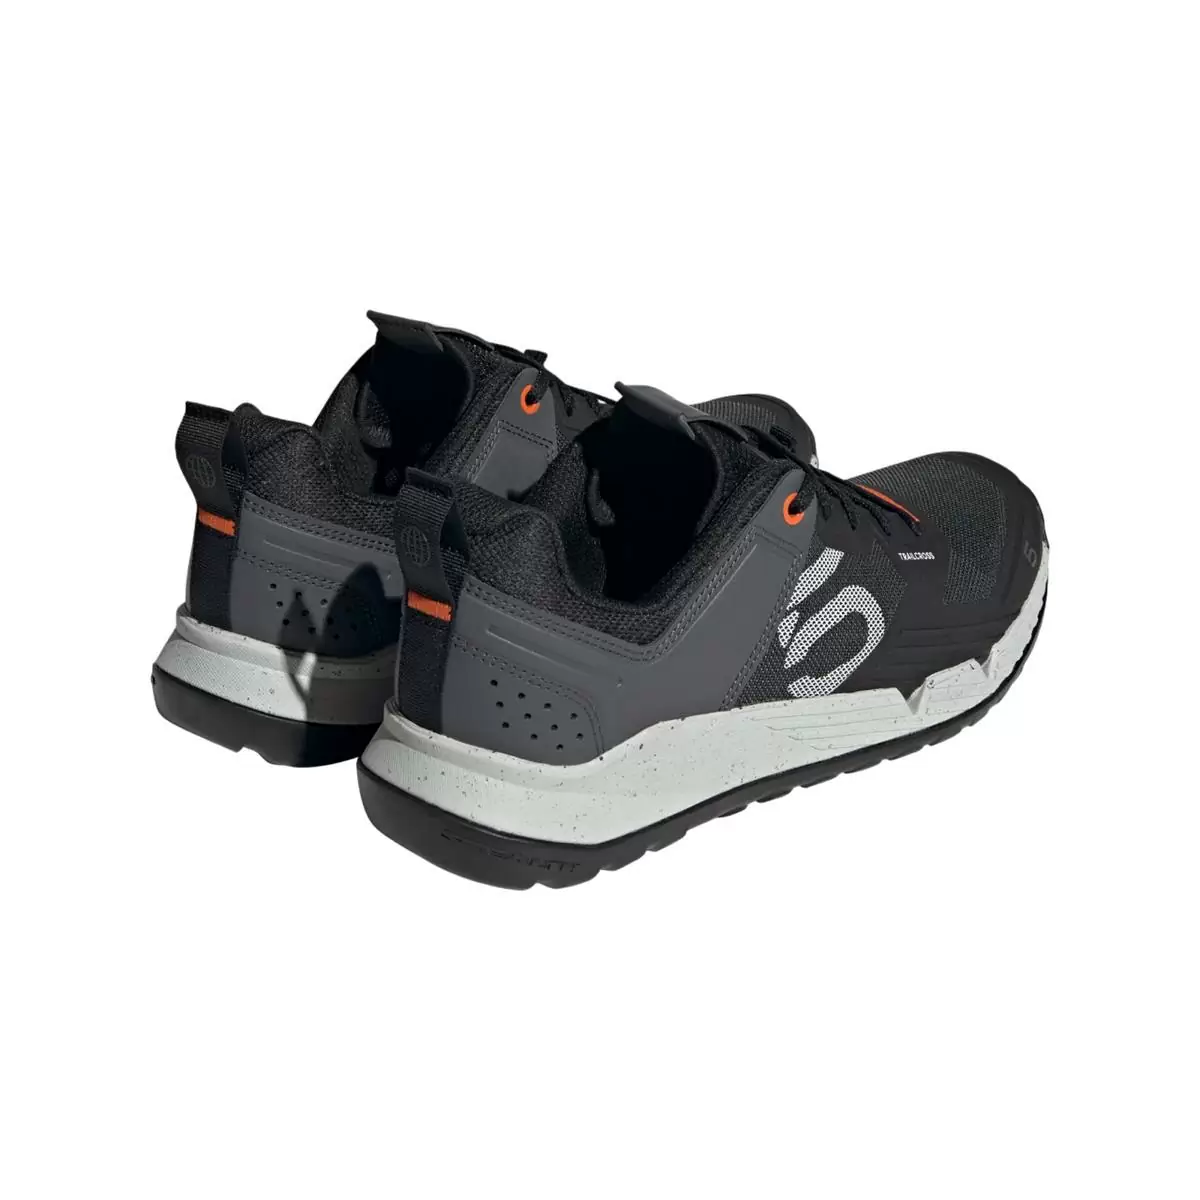 5.10 Trailcross XT Flat MTB Shoes Black/Grey Size 45 #5